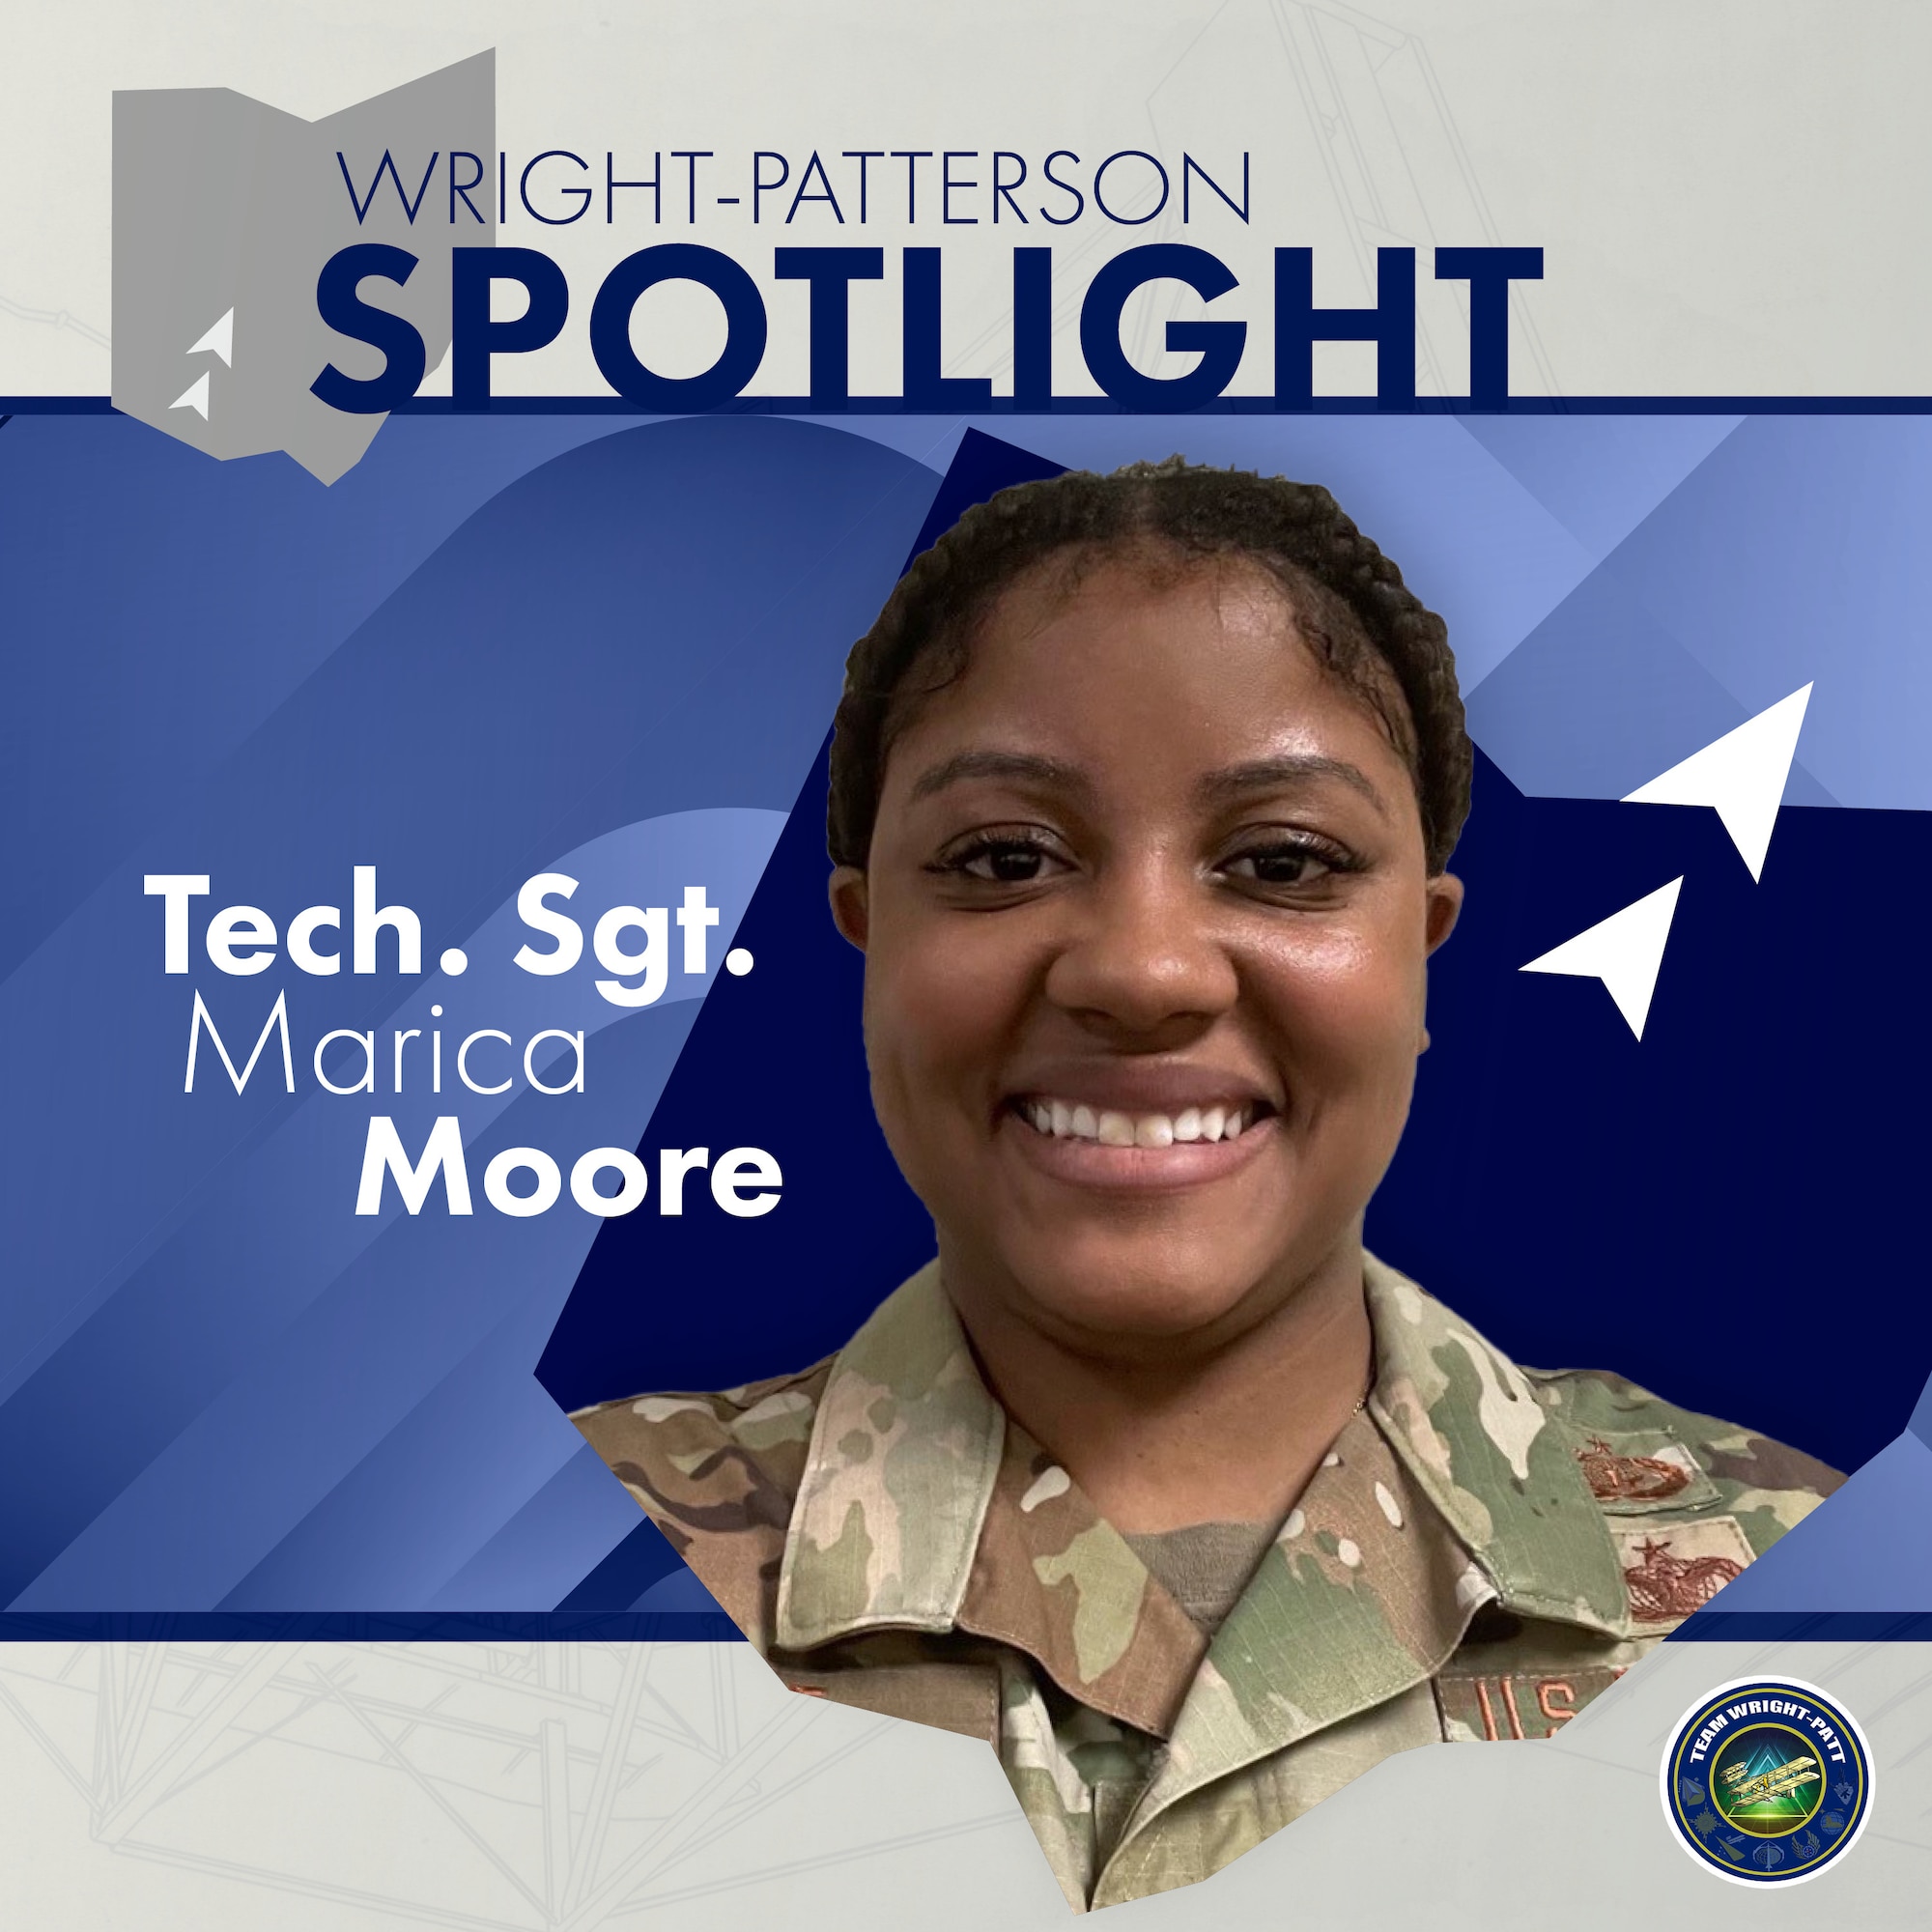 Wright-Patterson Spotlight: Tech. Sgt. Marica Moore